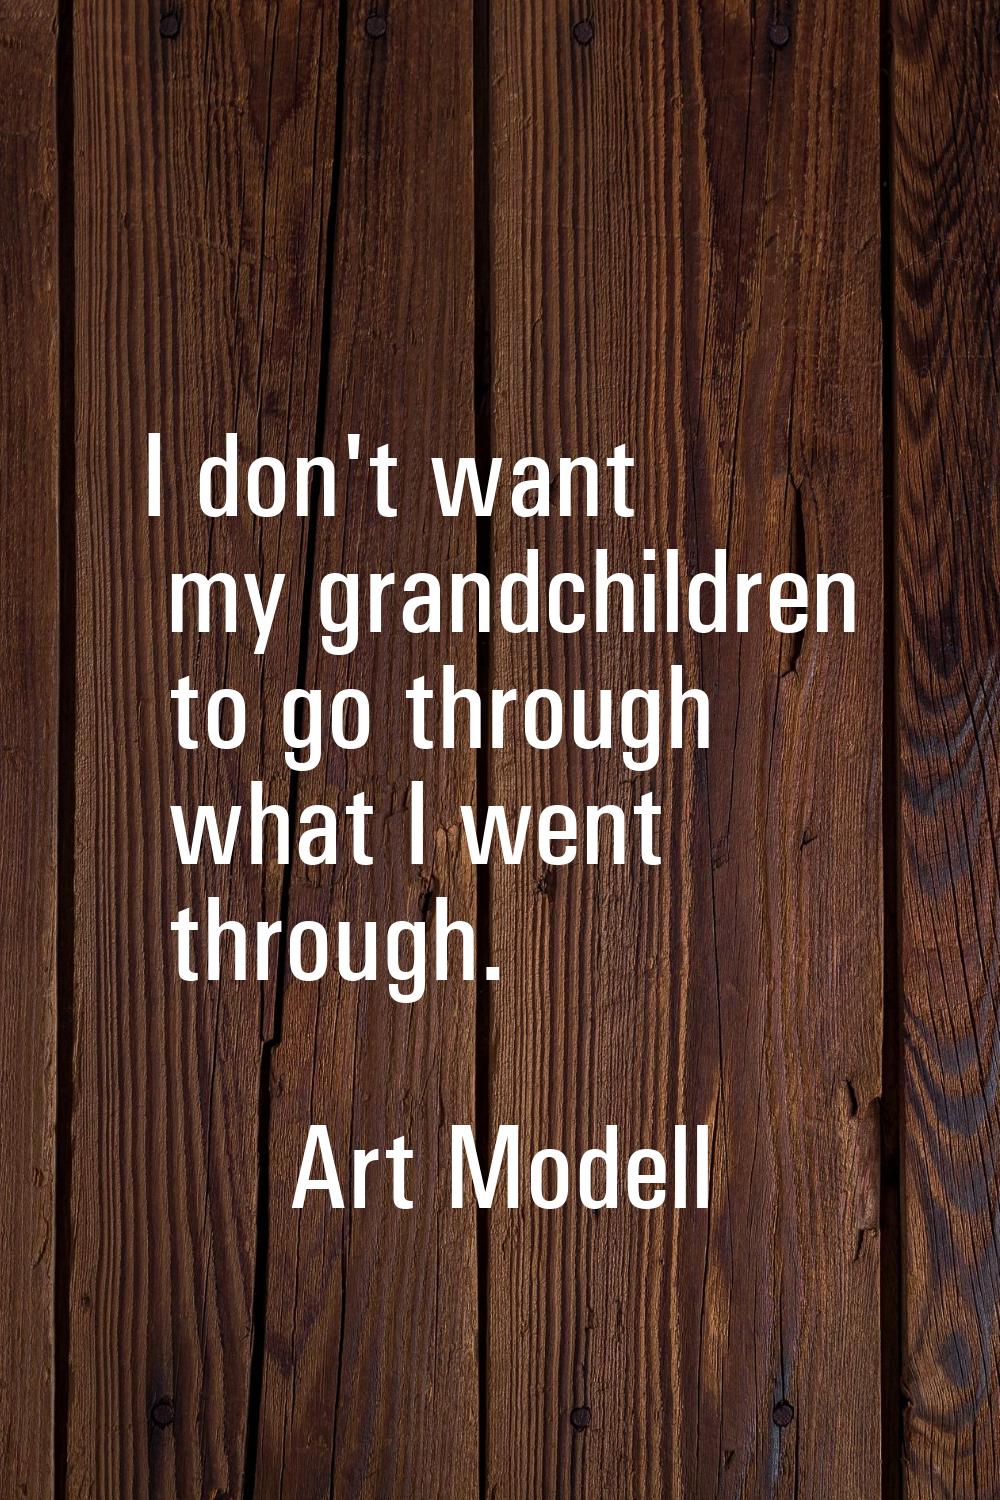 I don't want my grandchildren to go through what I went through.